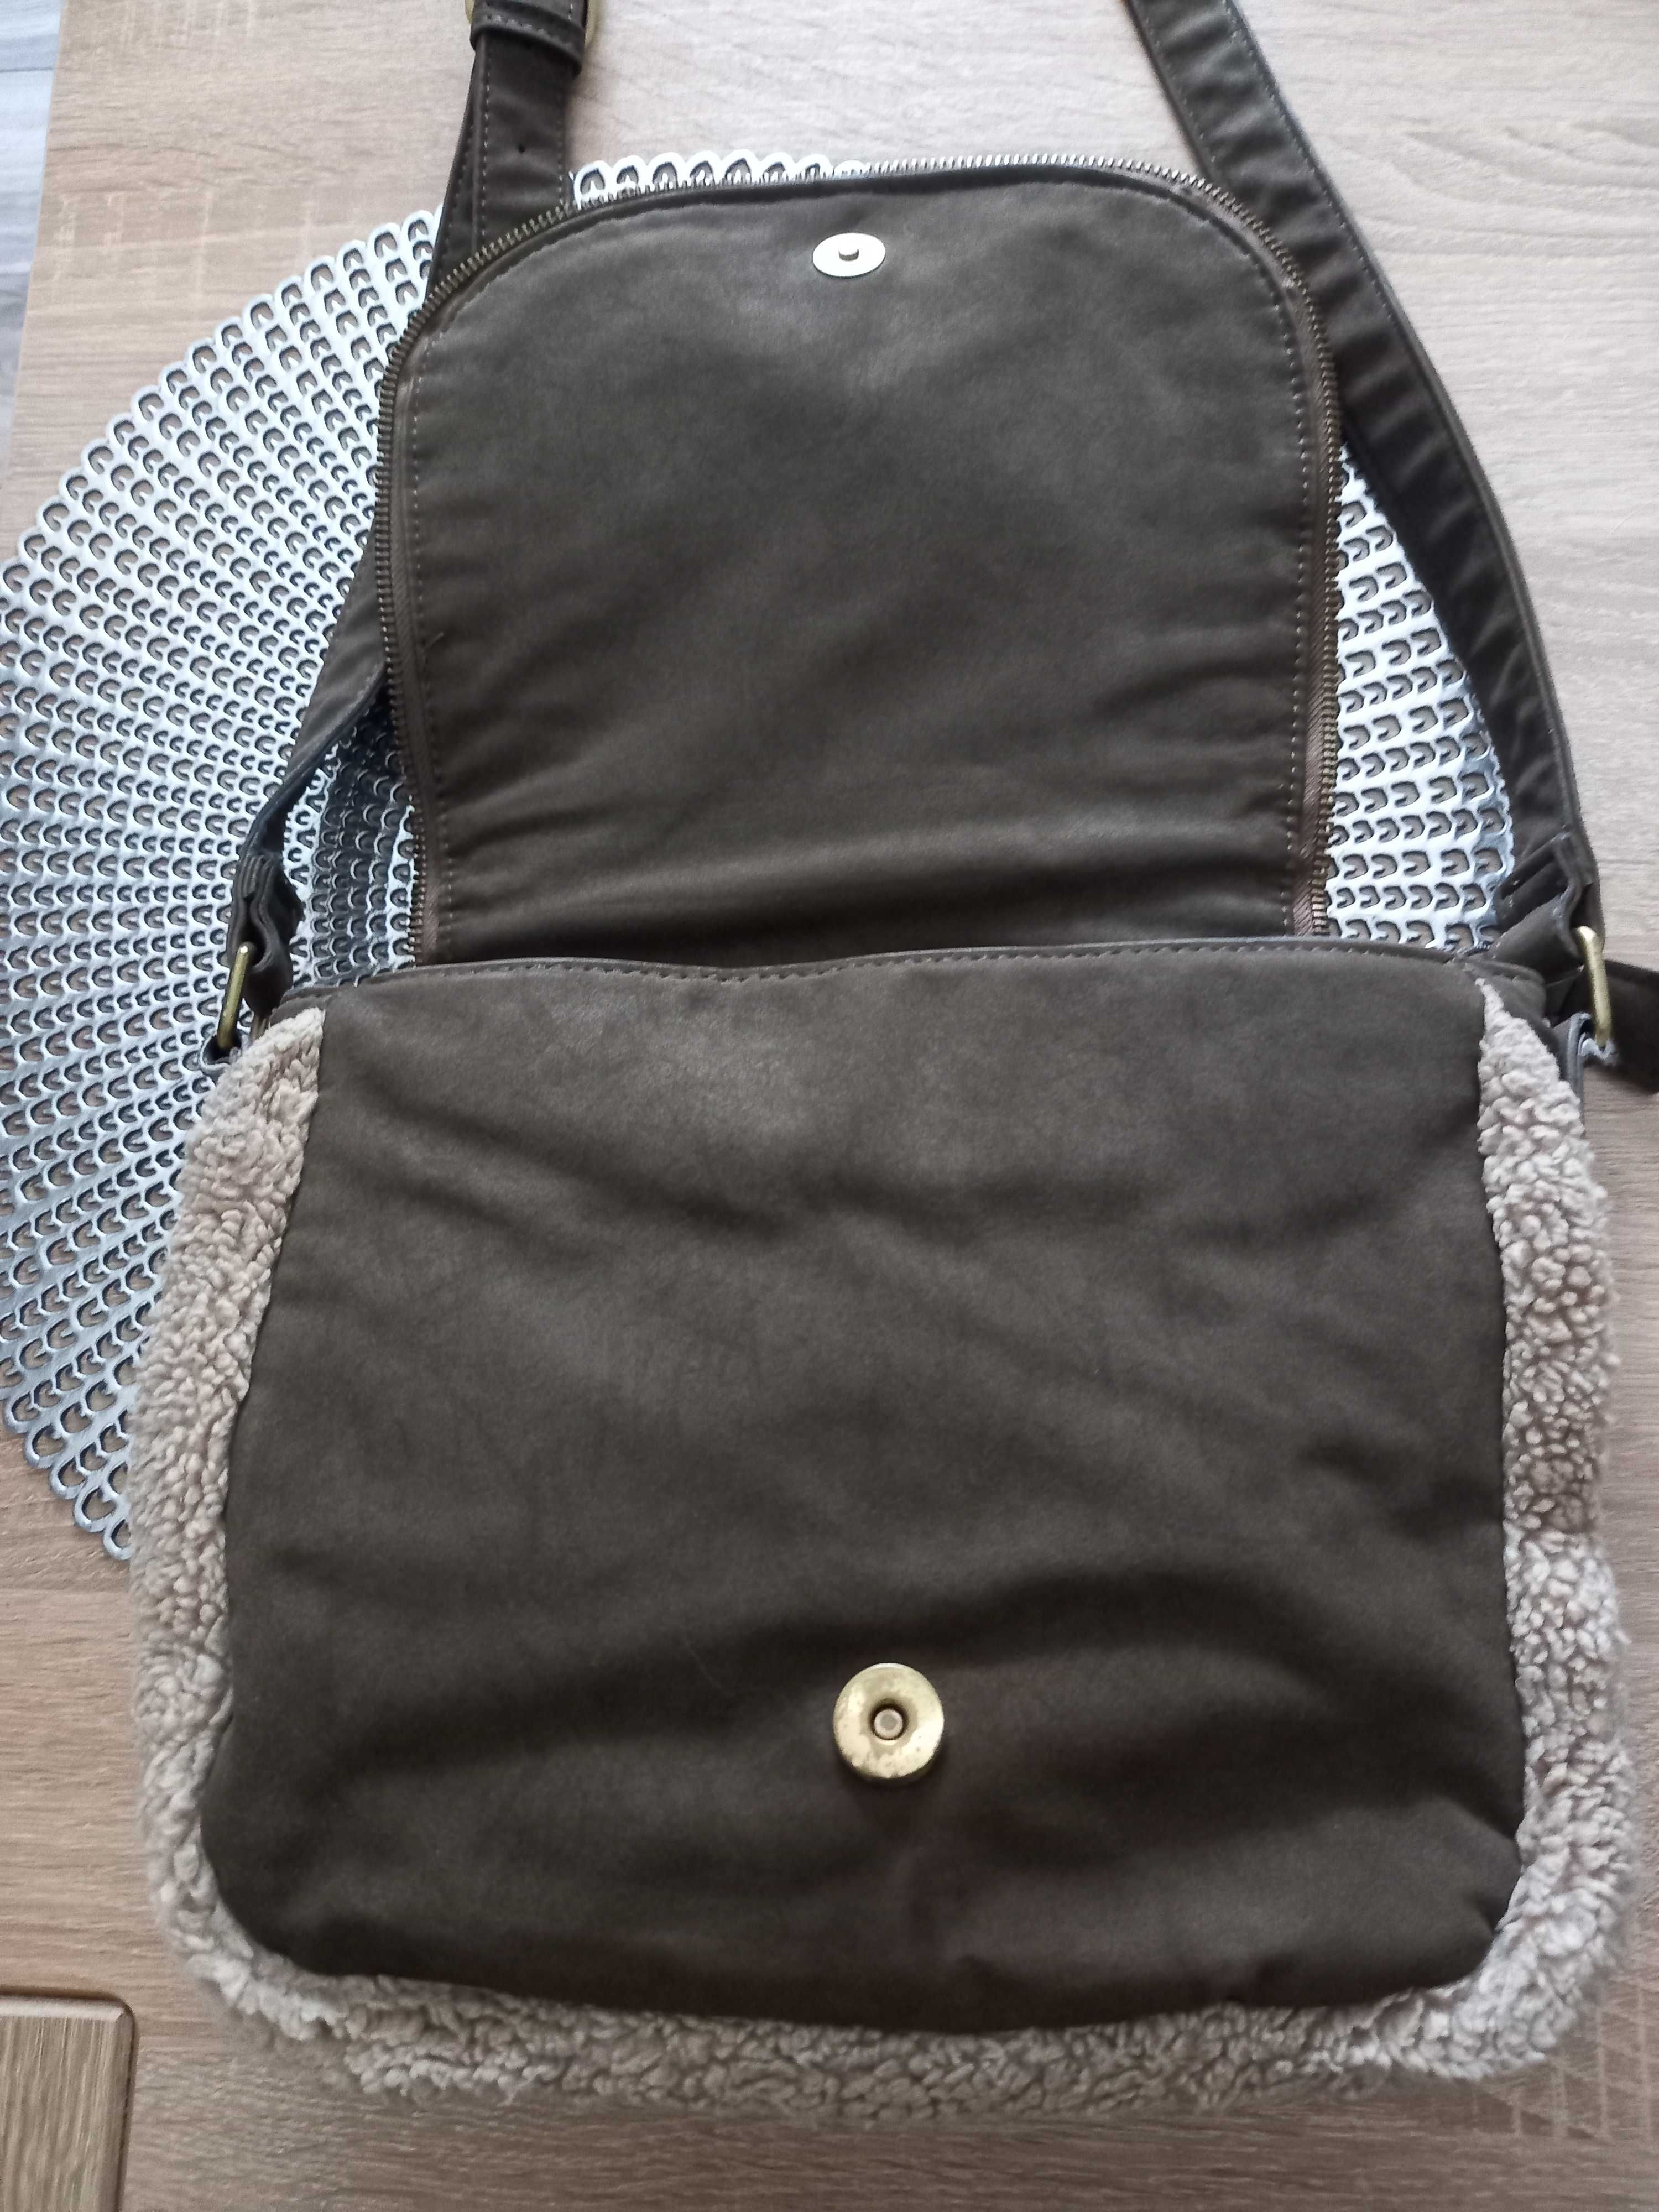 C&A brązowa torebka listonoszka torba